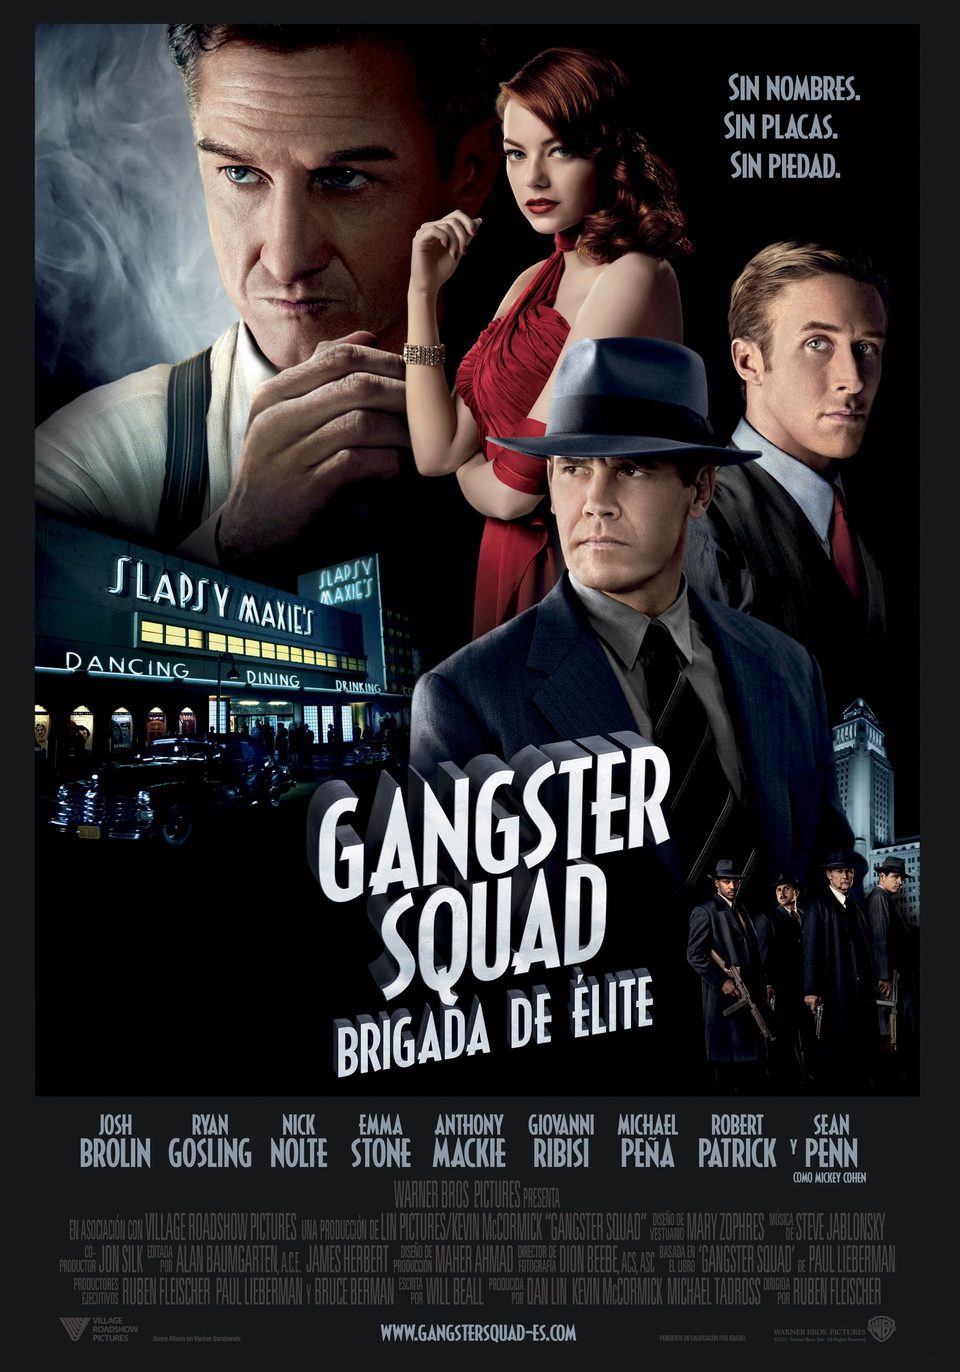 Cartel de Gangster Squad (Brigada de élite) - España